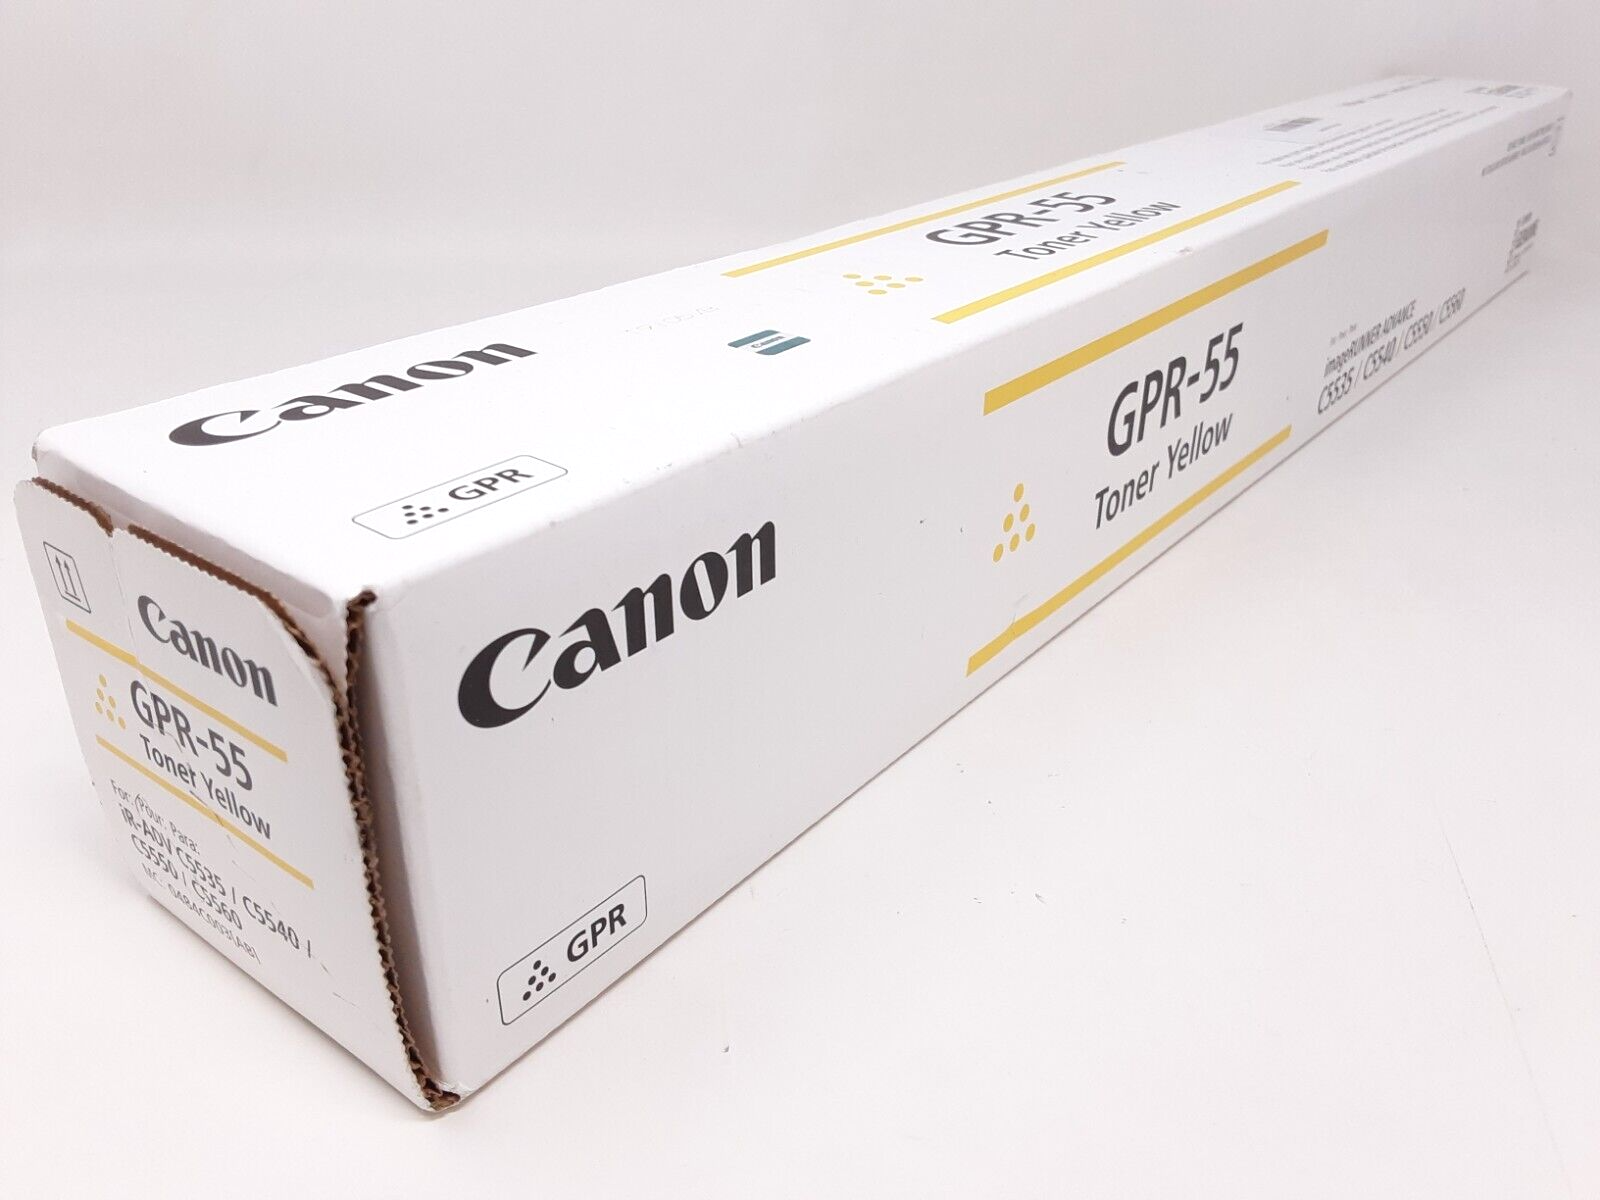 Genuine Canon GPR-55 Yellow Toner Cartridge 0484C003 for C5535 C5540 C5550 C5560 Canon GPR-55, GPR55